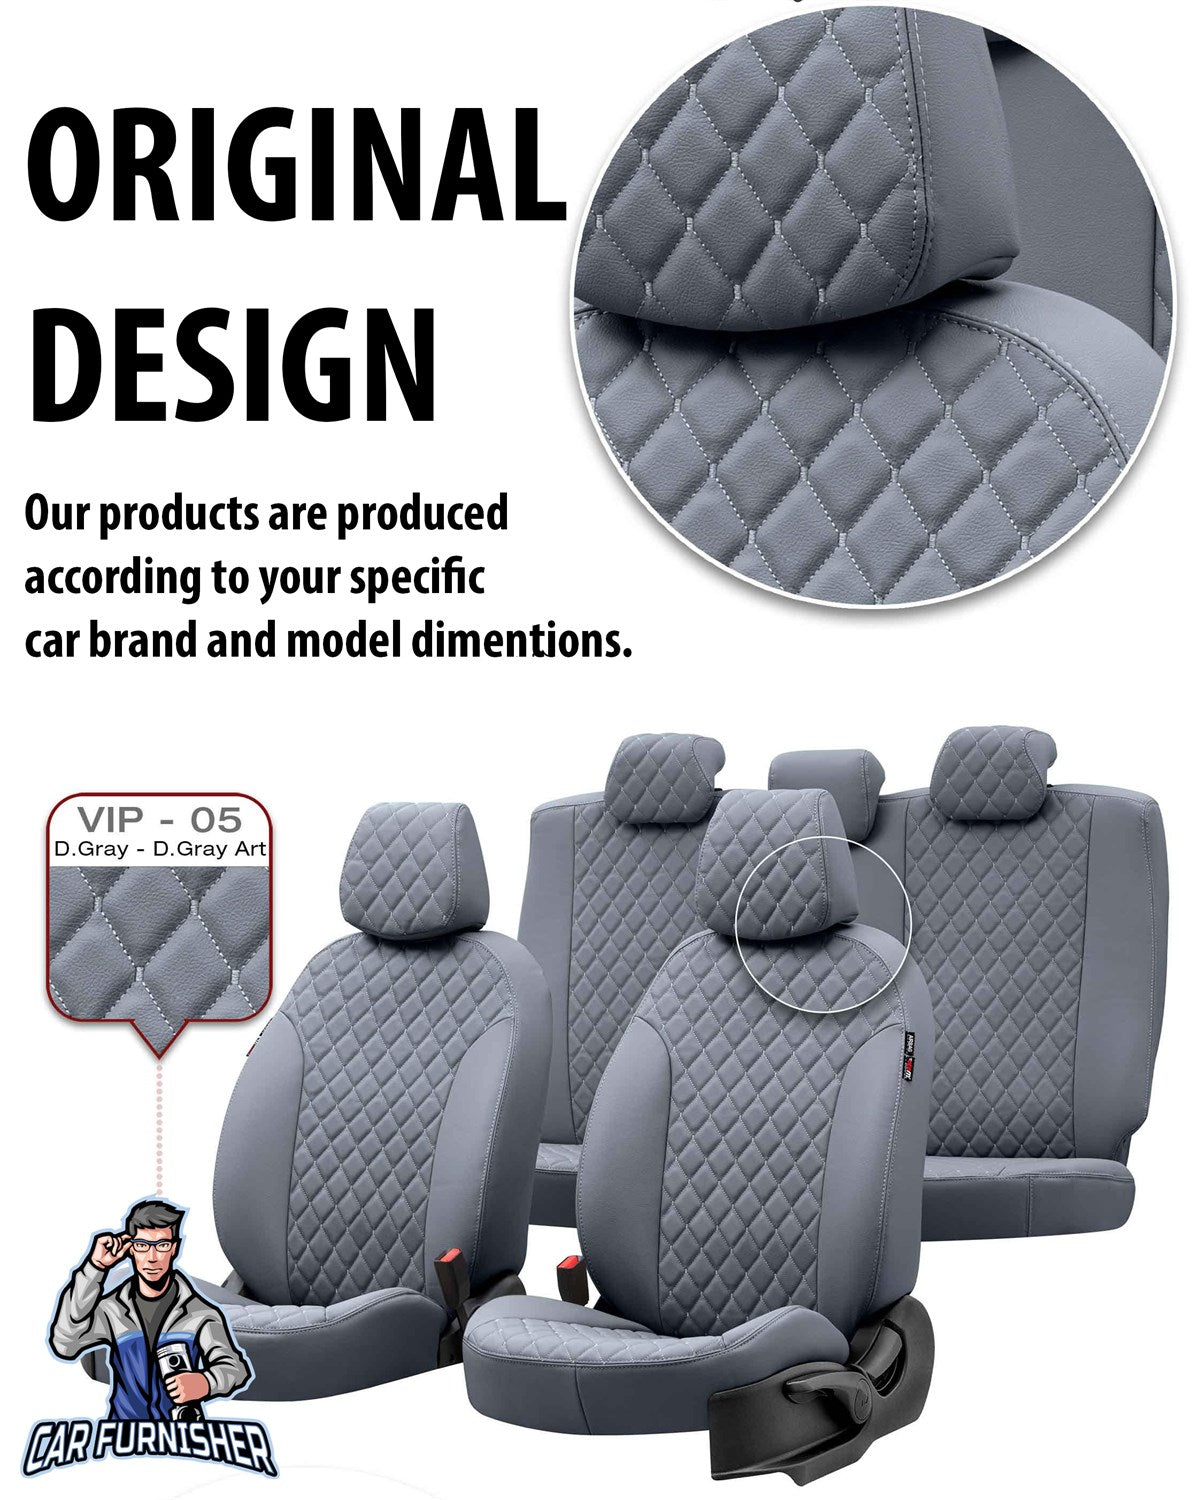 Renault Captur Seat Covers Madrid Leather Design Dark Gray Leather